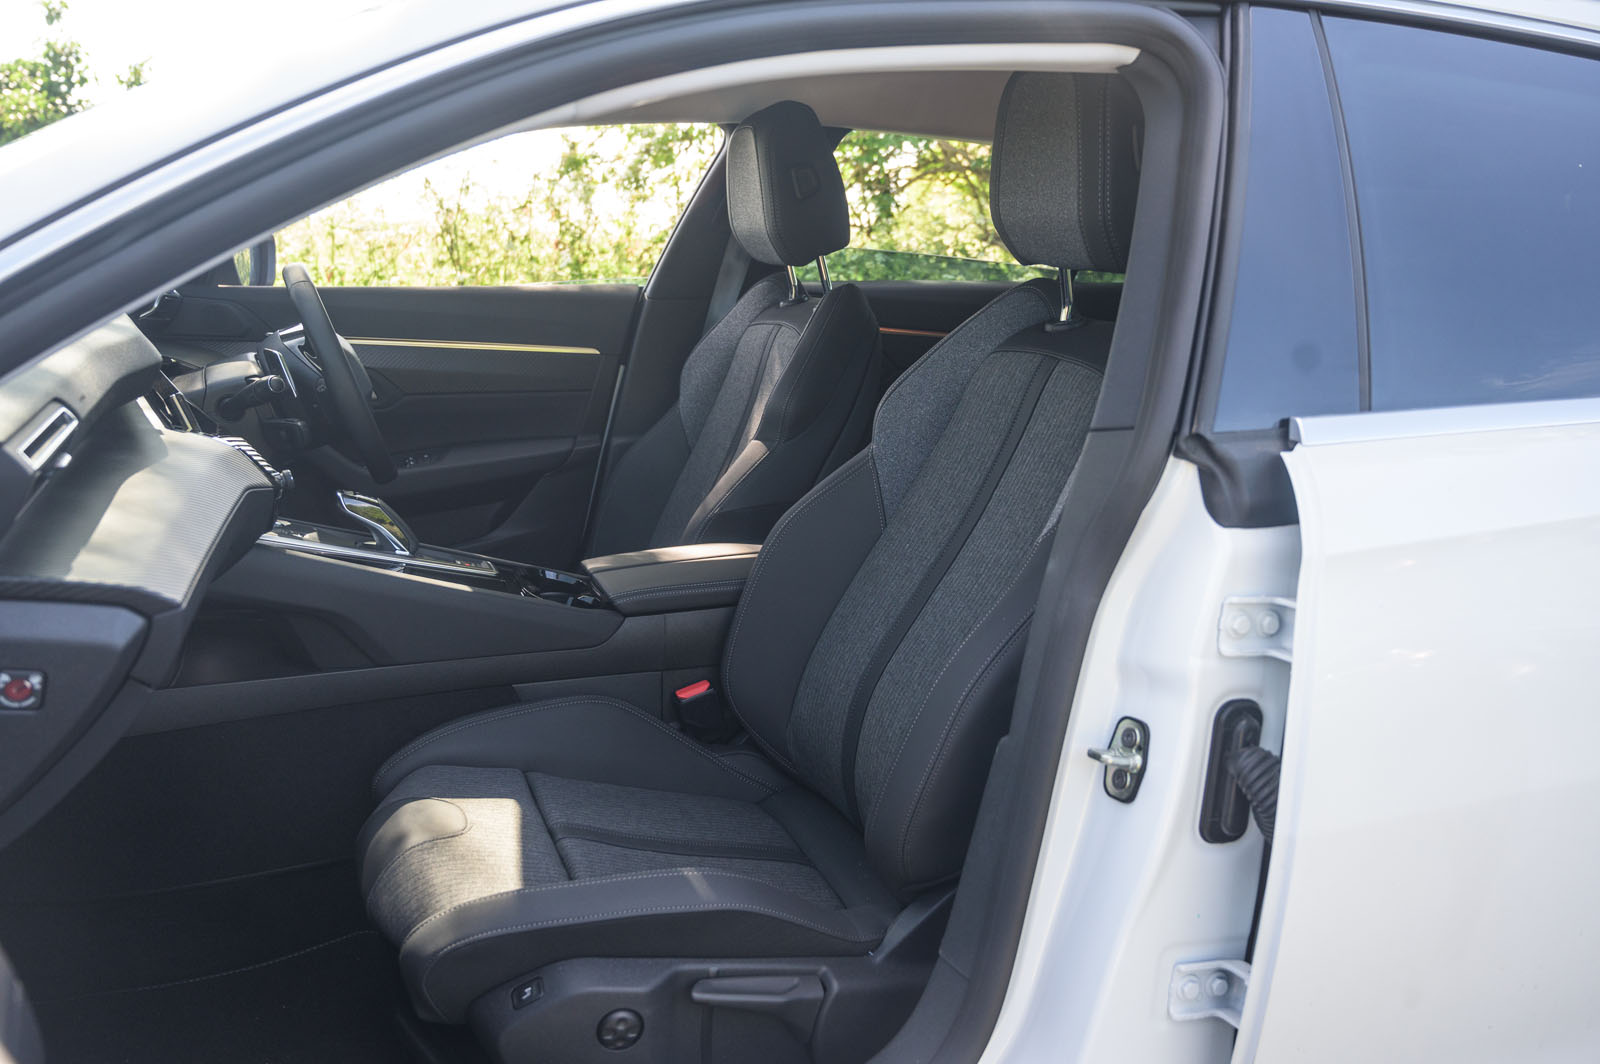 Peugeot 508 SW Hybrid 2020 road test review - cabin